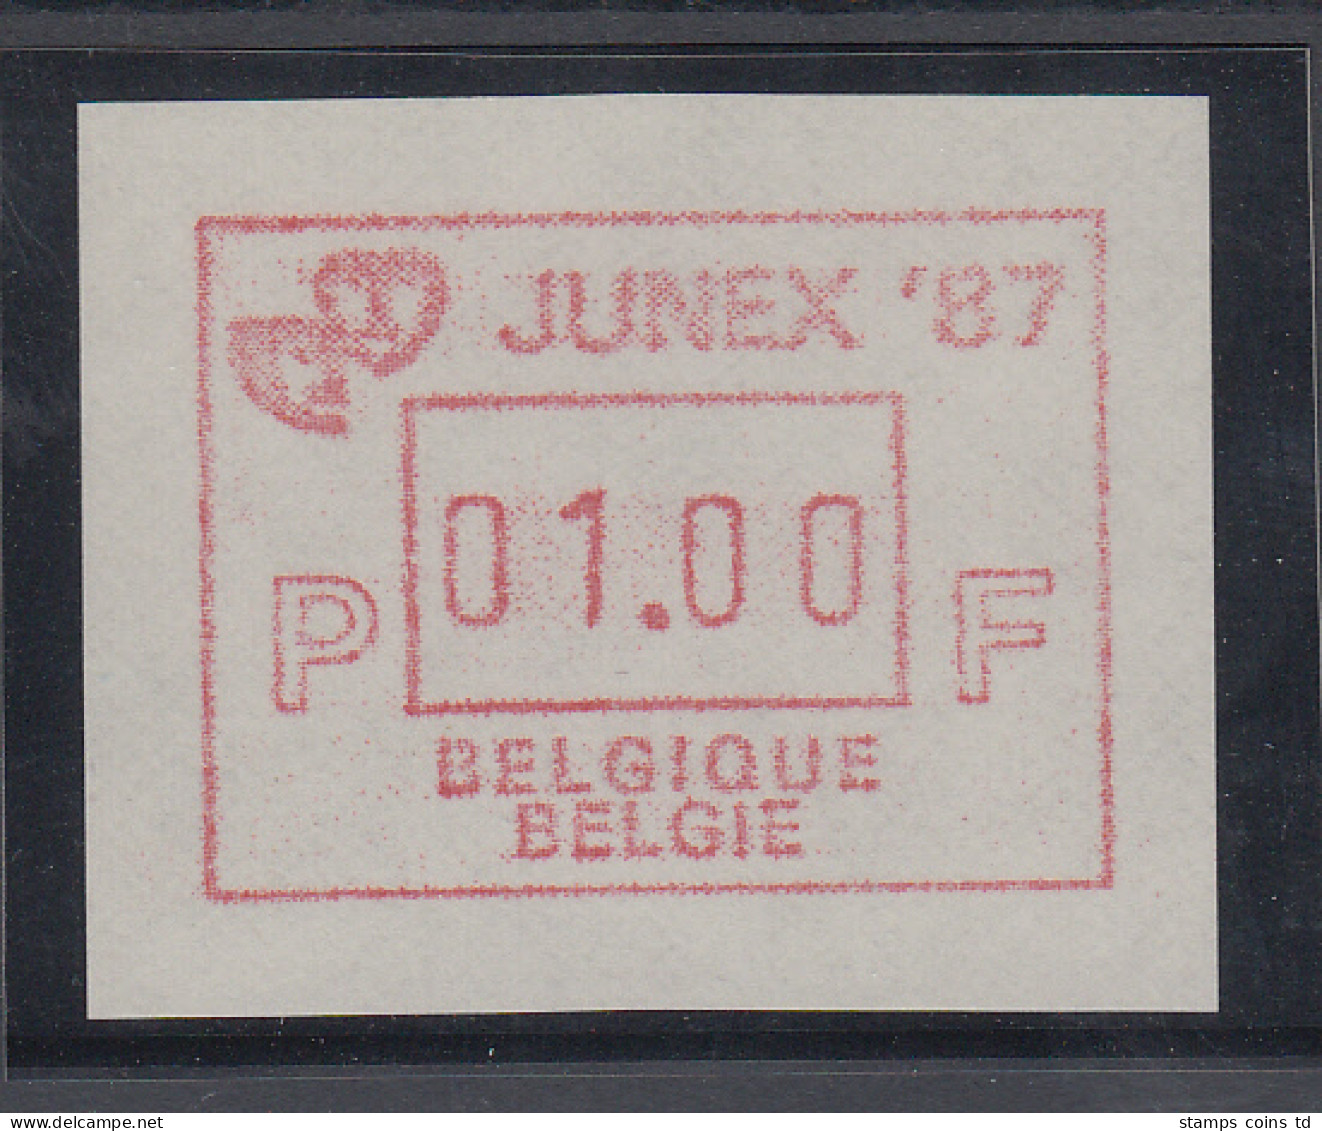 Belgien FRAMA-ATM Sonderausgabe JUNEX '87 Von VS **  - Altri & Non Classificati